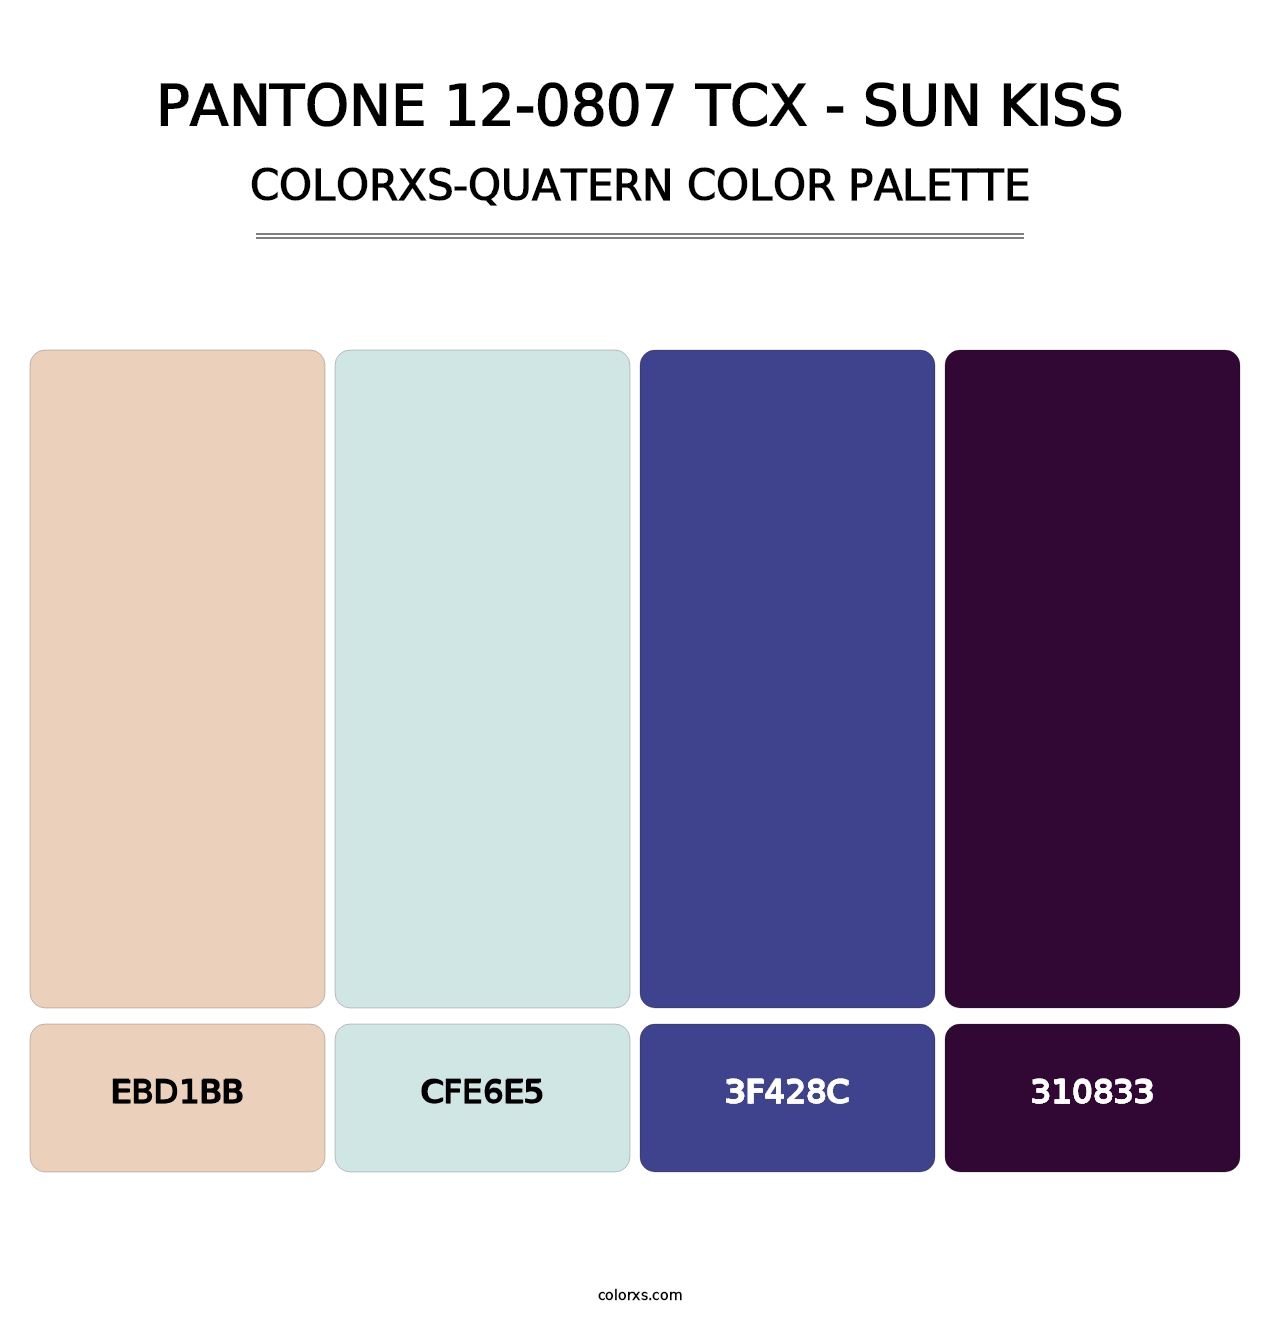 PANTONE 12-0807 TCX - Sun Kiss - Colorxs Quatern Palette